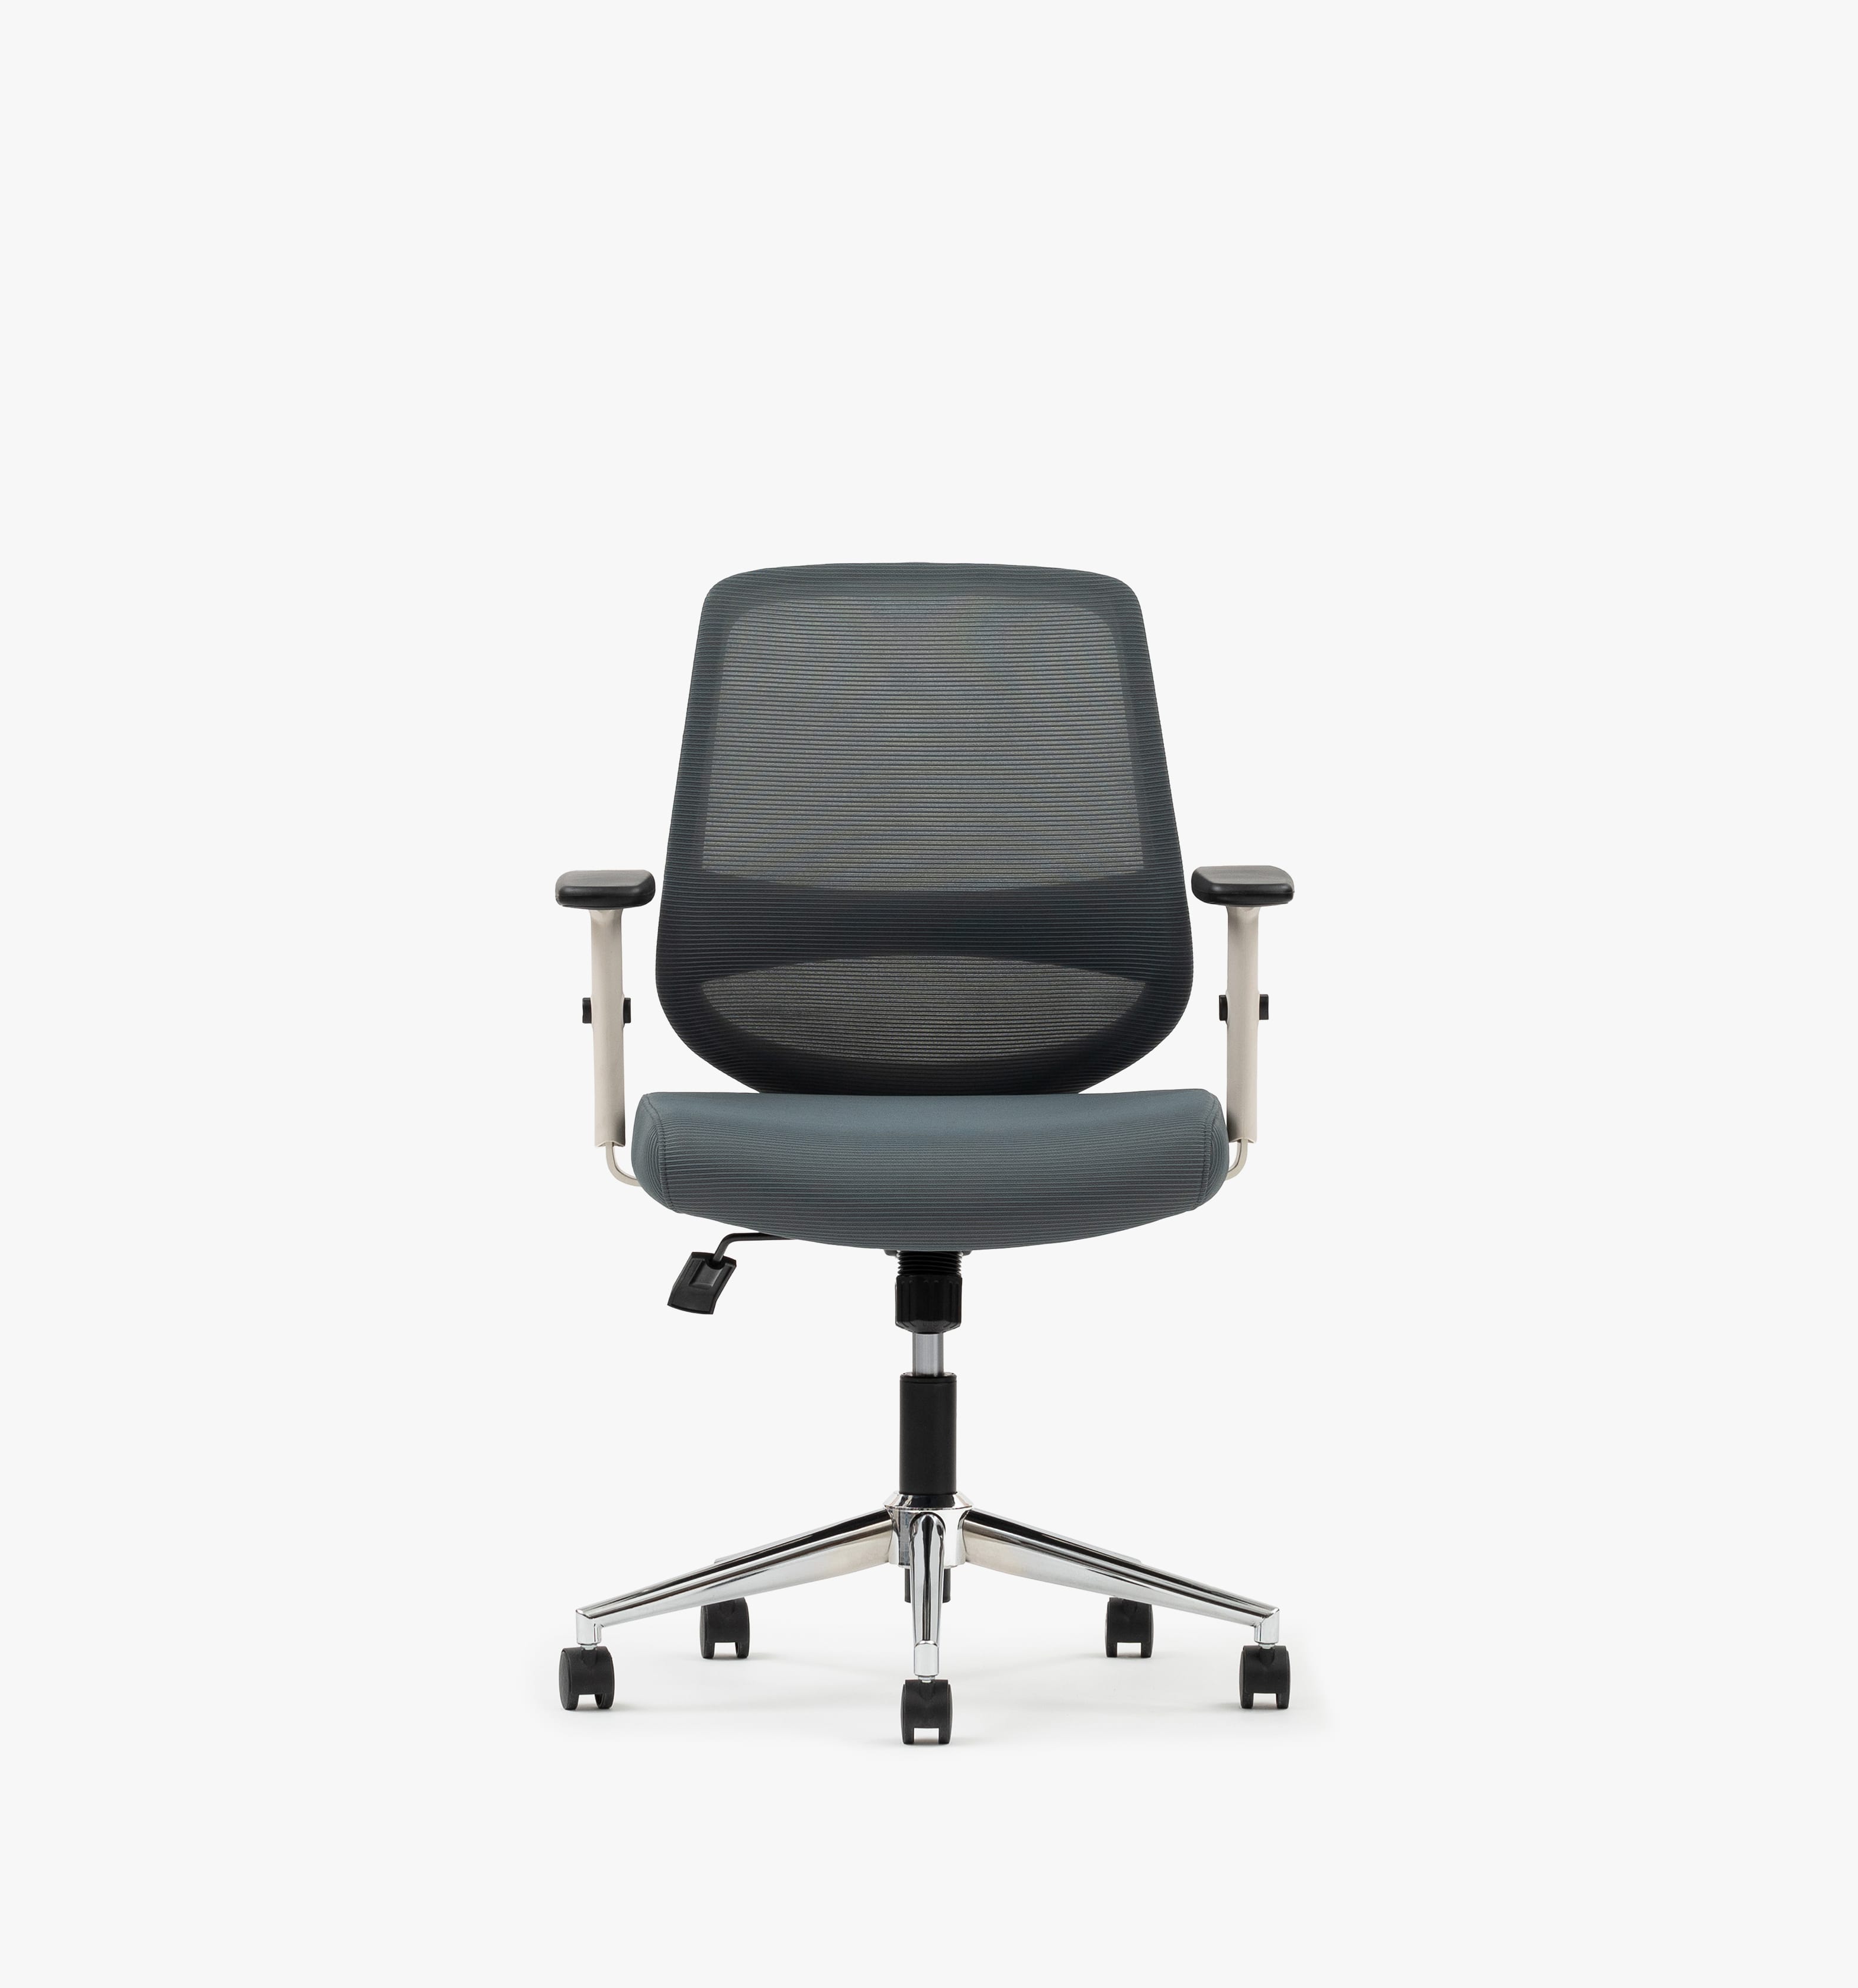 The Edison chair - grey